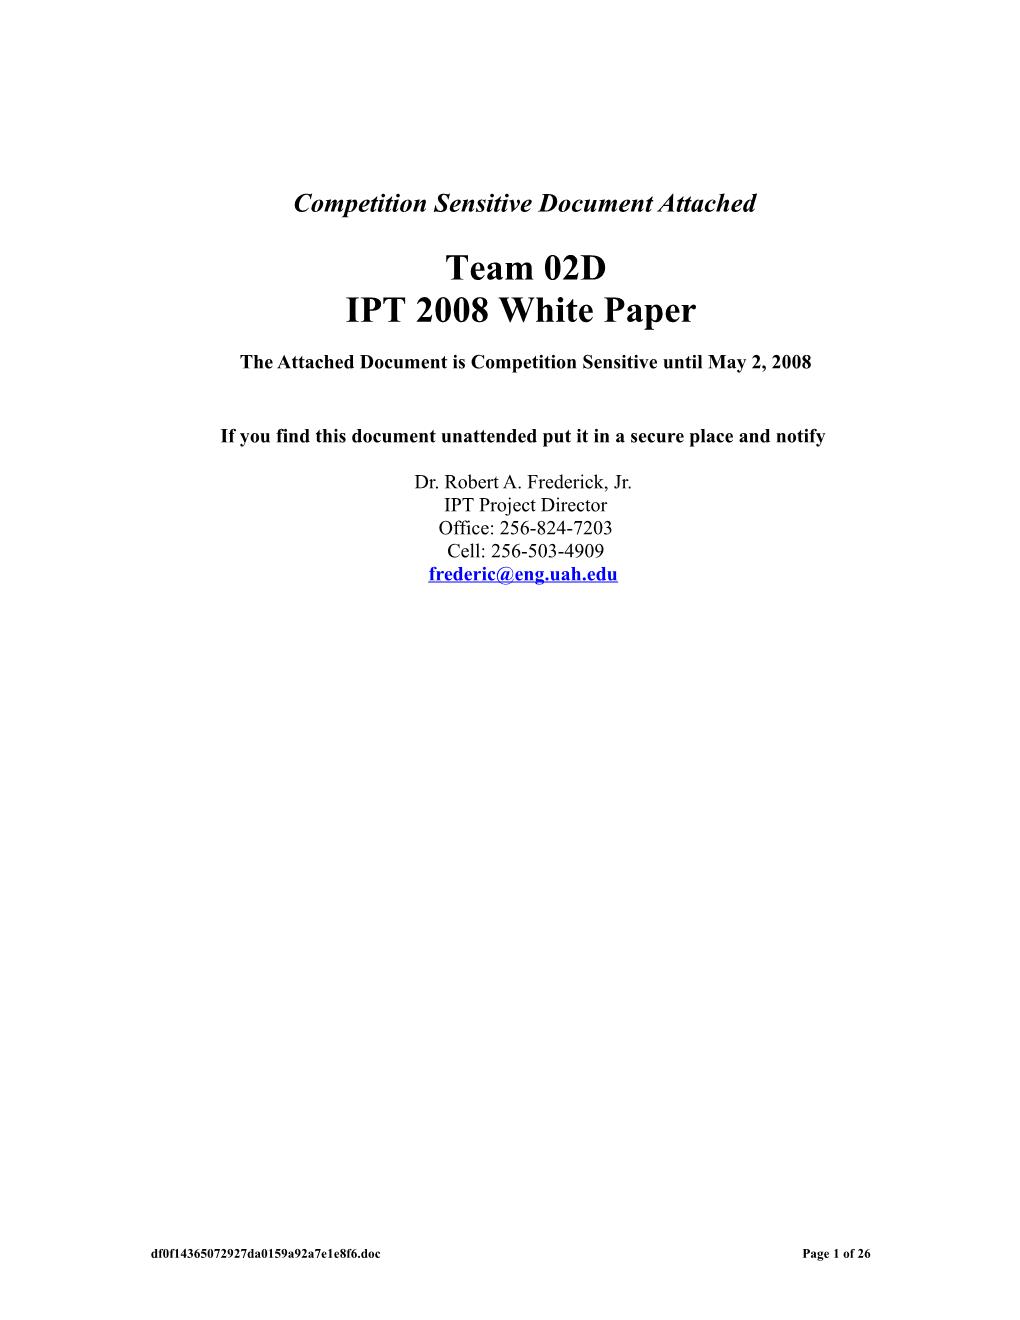 IPT2003 White Paper Template